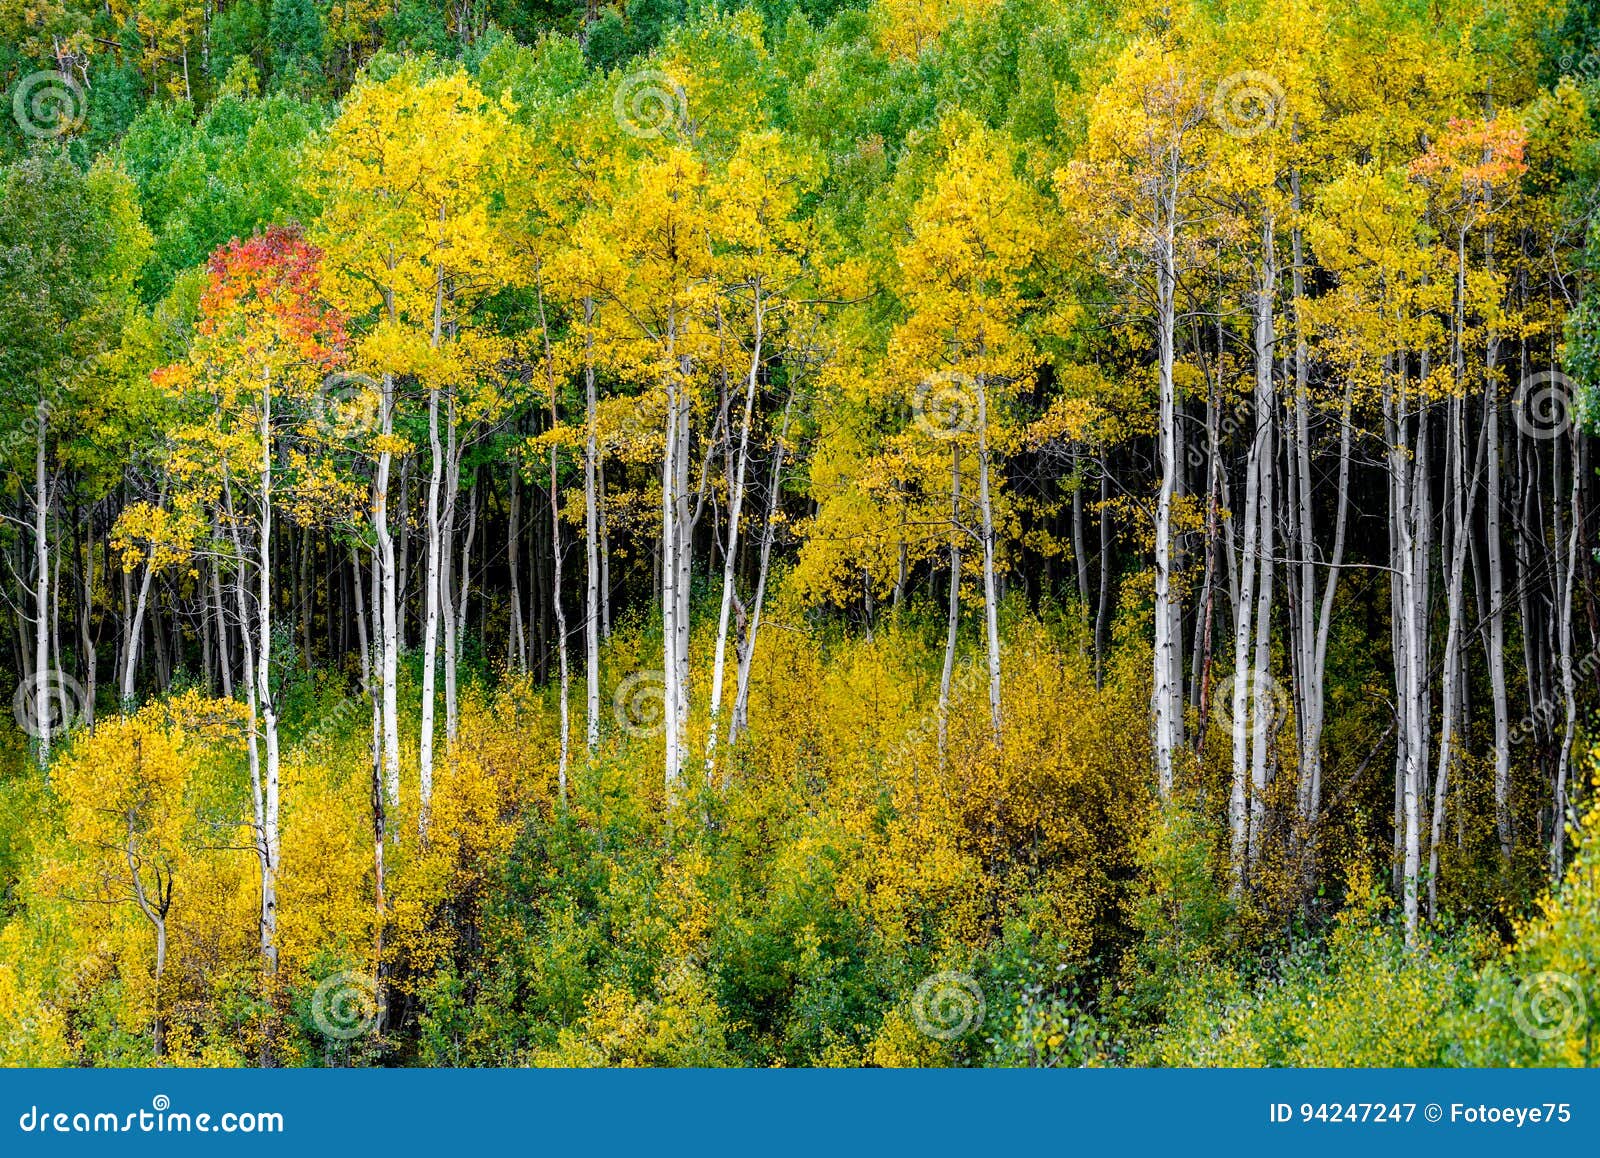 maroon bells forest - colorado aspen autumn fall colors